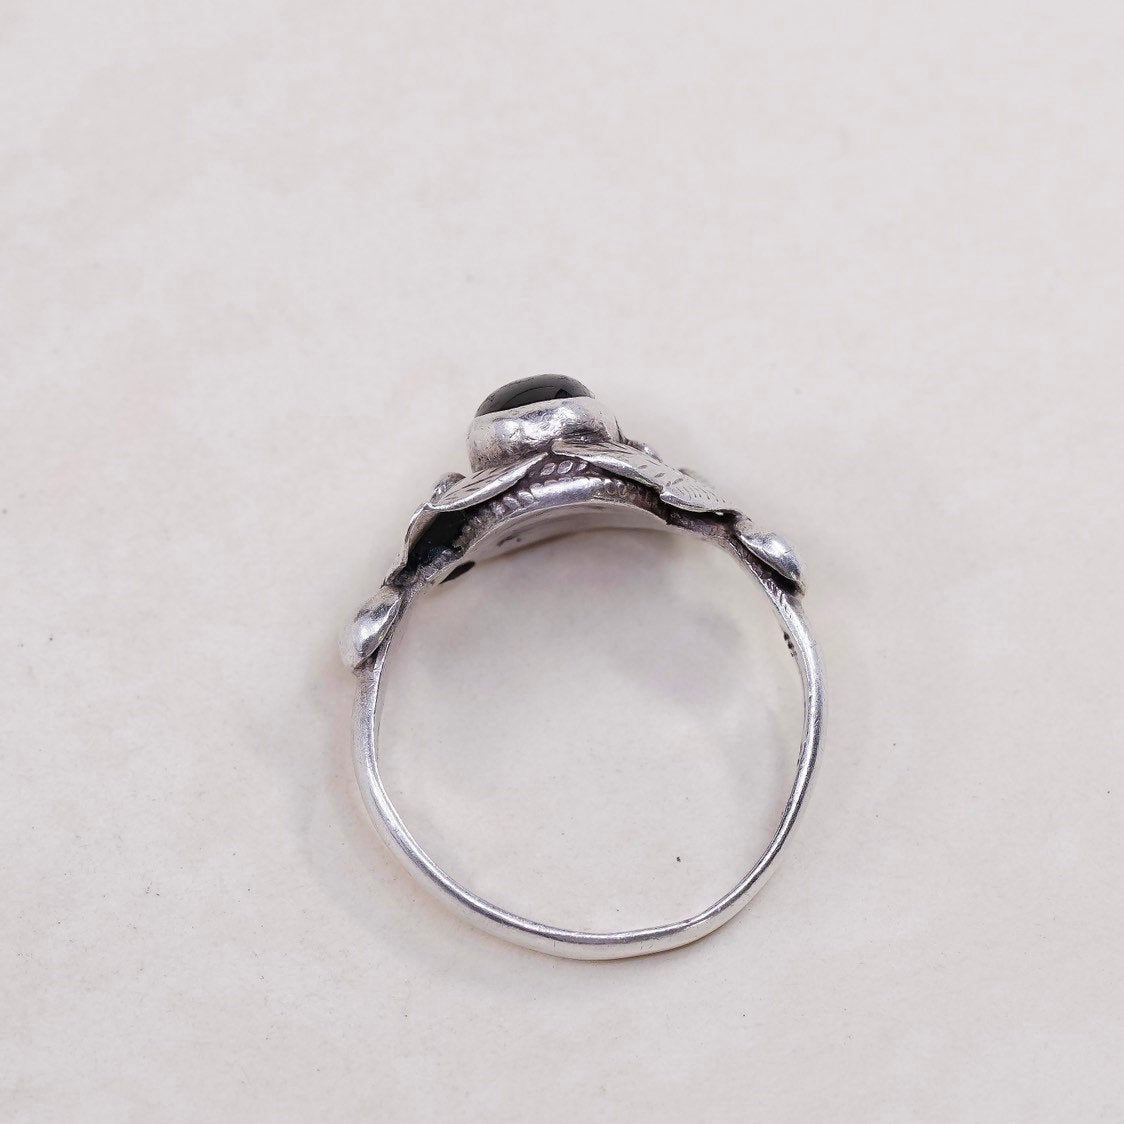 sz 7, vtg sterling silver handmade ring, 925 w/ garnet n leaves around